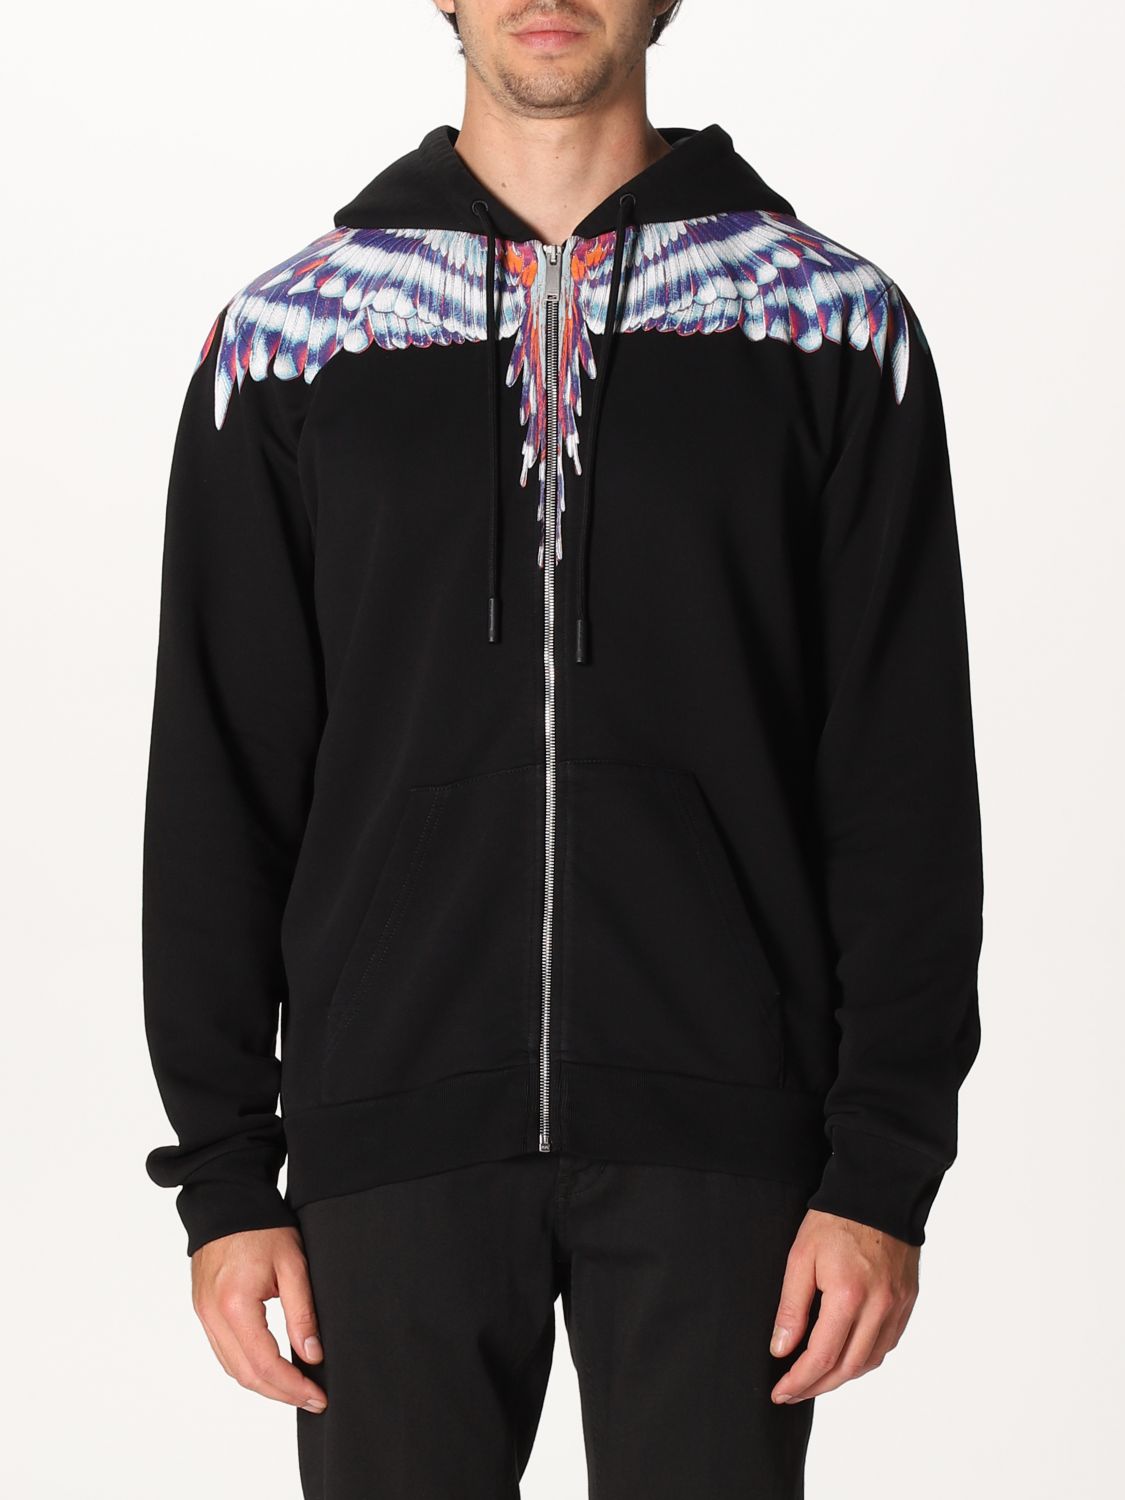 MARCELO BURLON: hoodie zip Black | Marcelo Burlon sweatshirt CMBE001S21FLE001 at GIGLIO.COM